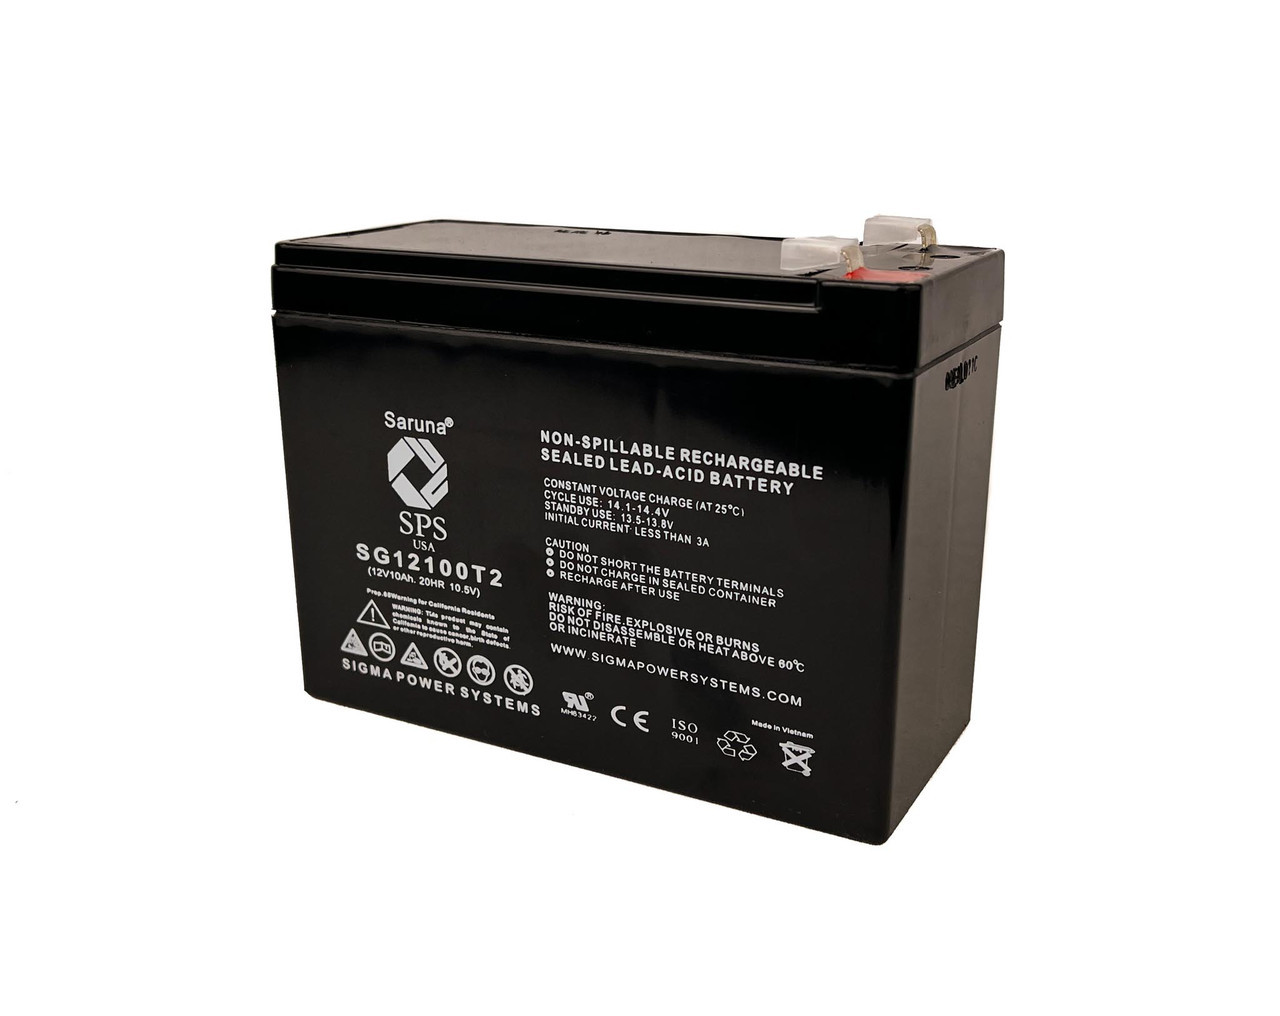 Raion Power 12V 10Ah Non-Spillable Replacement Rechargebale Battery for Schwinn X1000